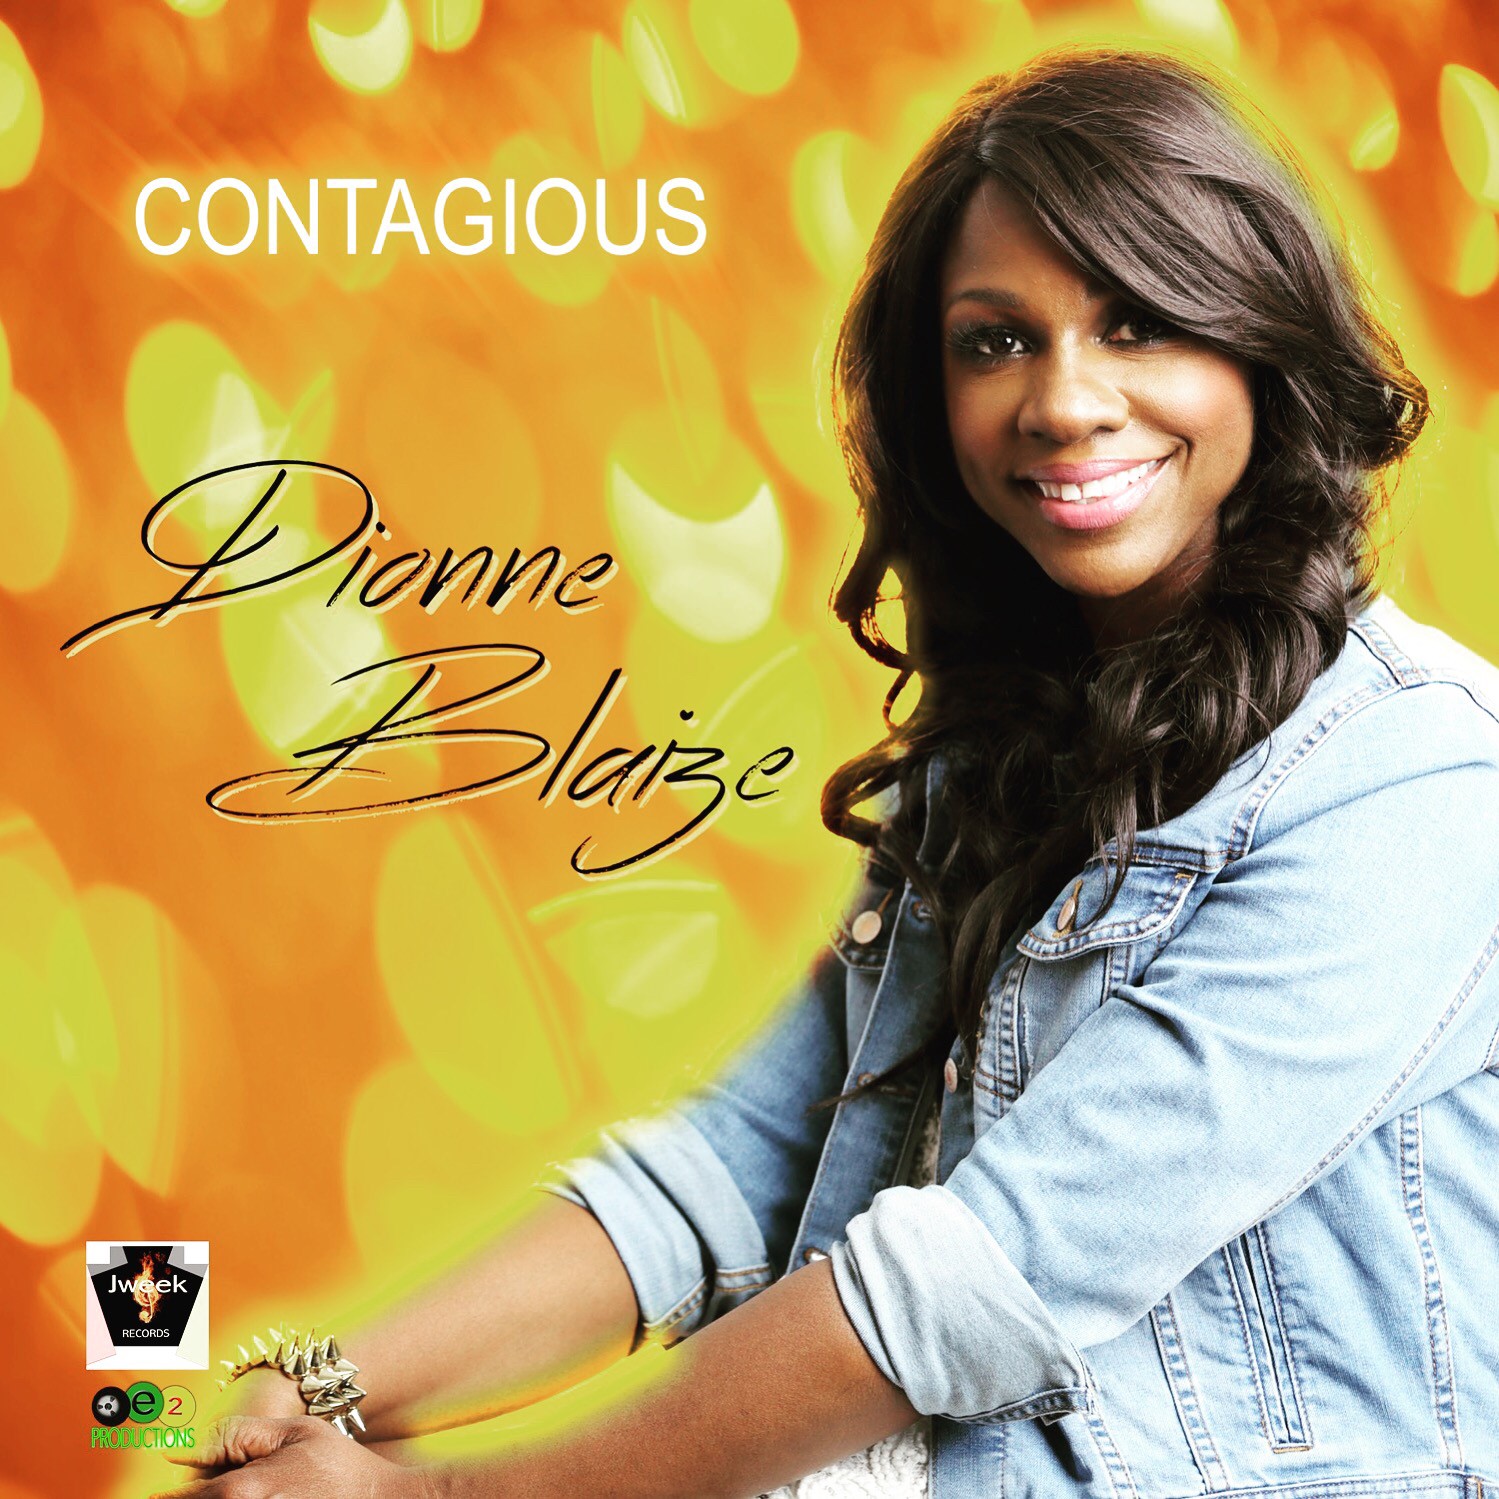 Dionne Blaize - Free Up